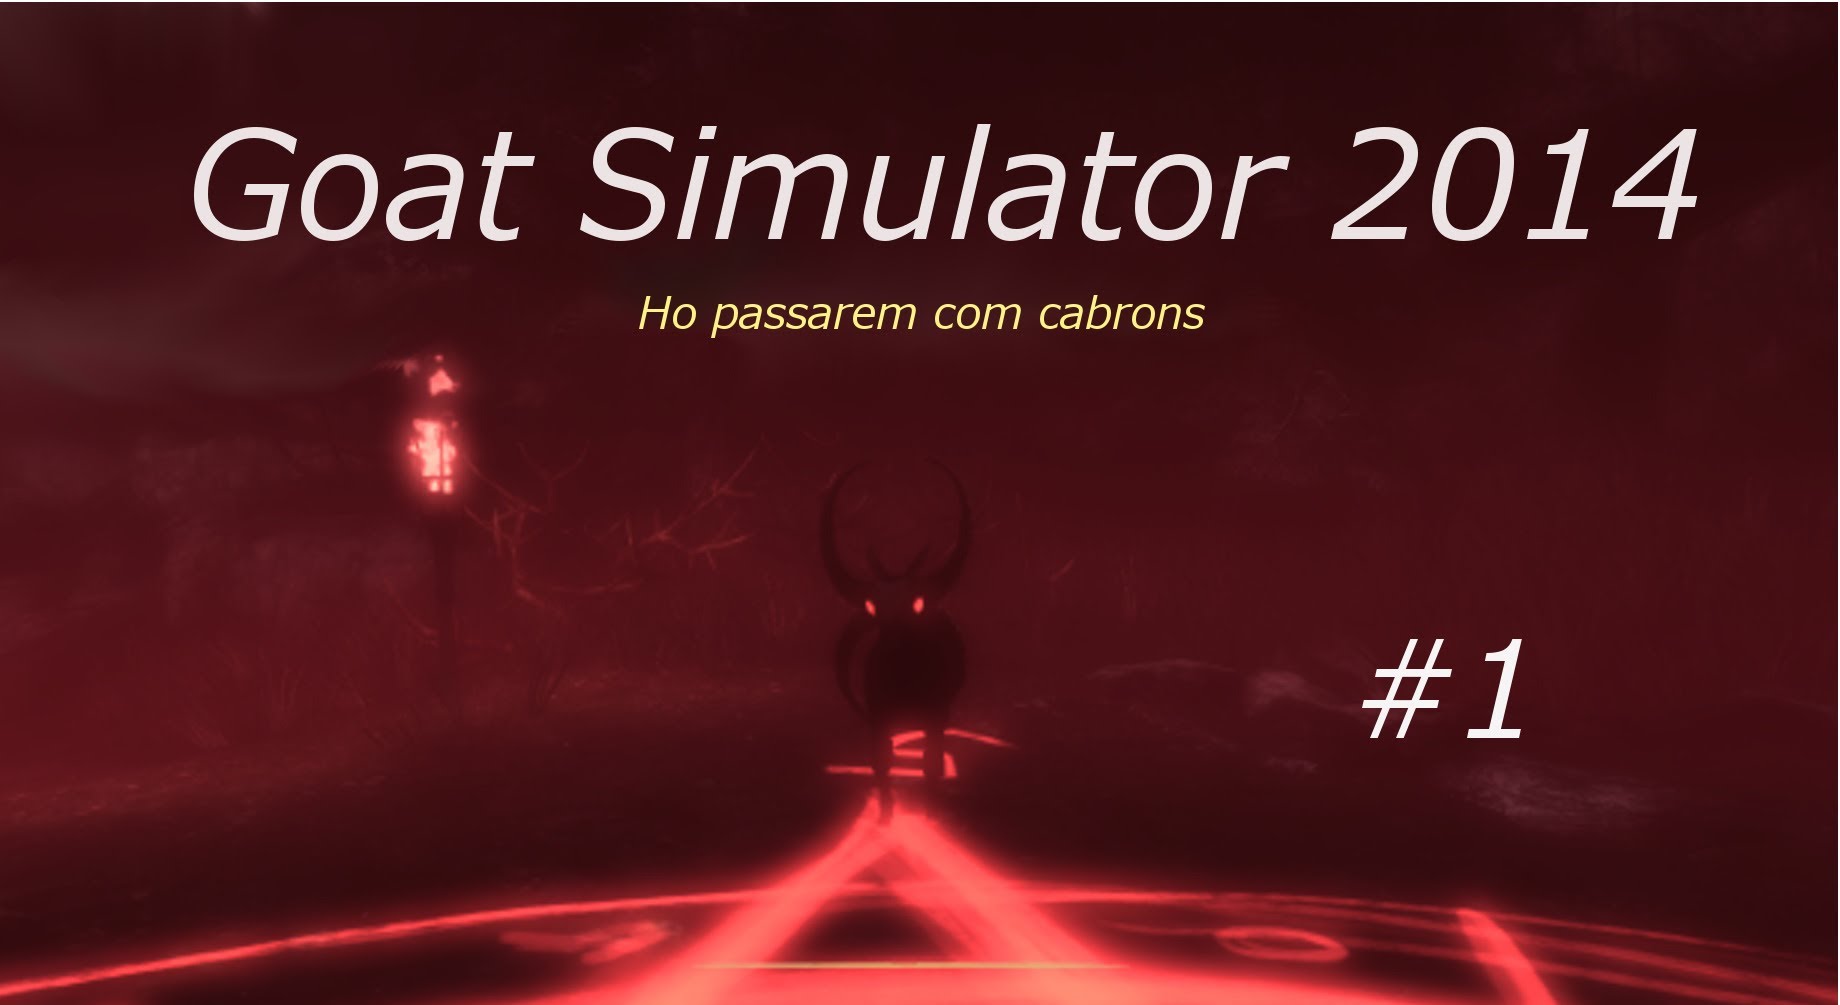 Partida al Goat Simulator 2014: La cabra diabòlica. de LópezForn